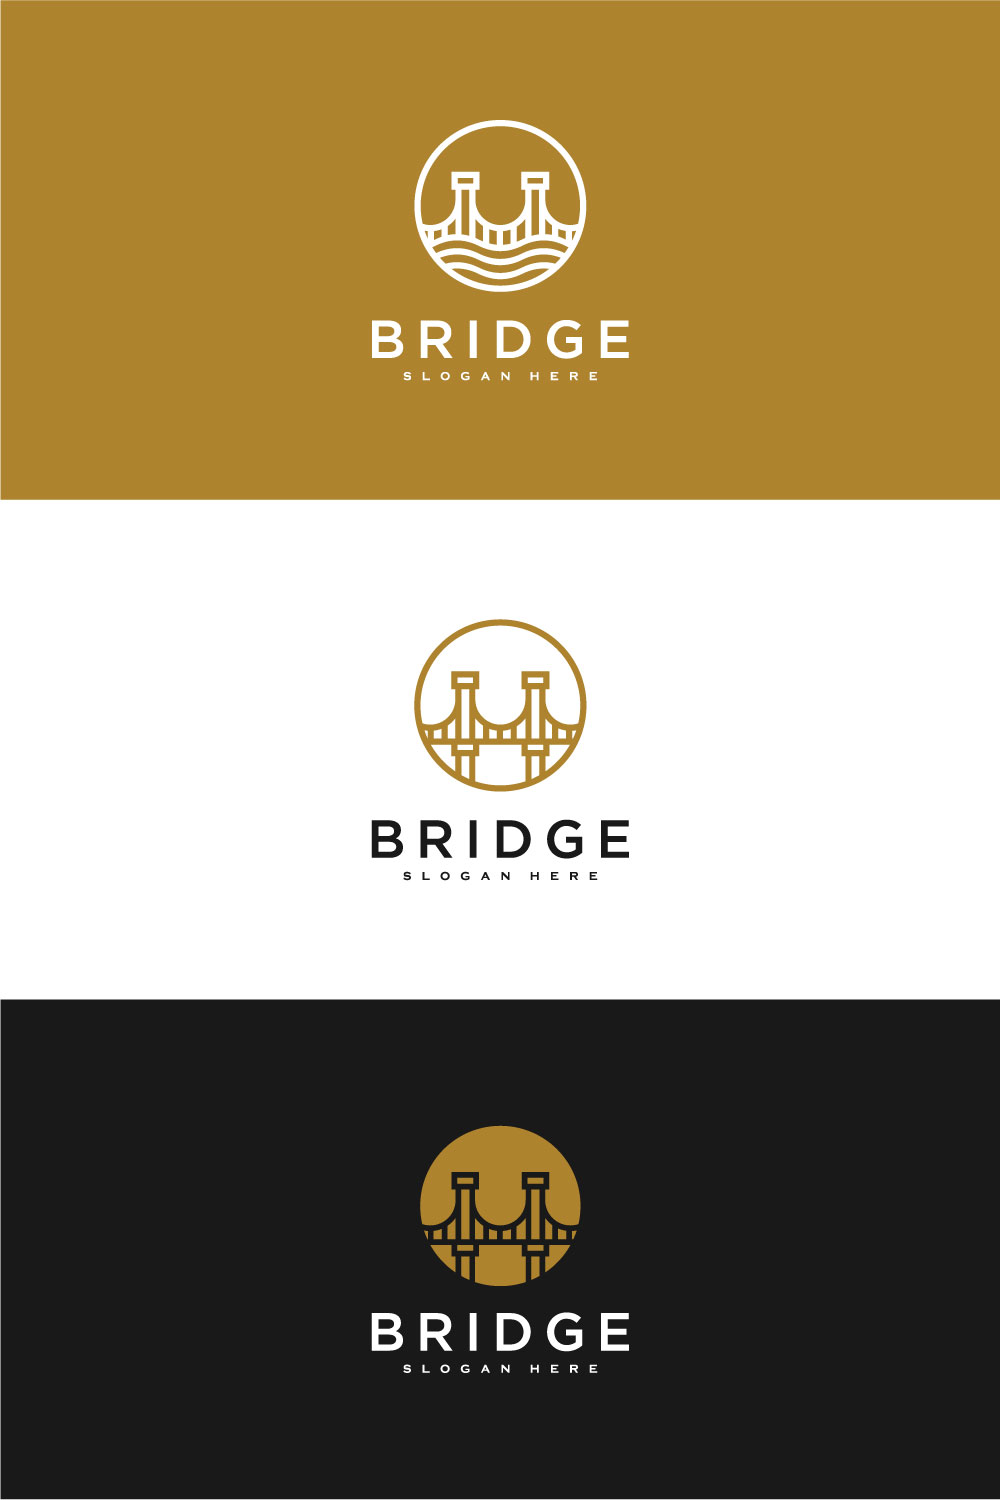 Set Of Bridge Architecture And Constructions Logo Design Pinterest Image.